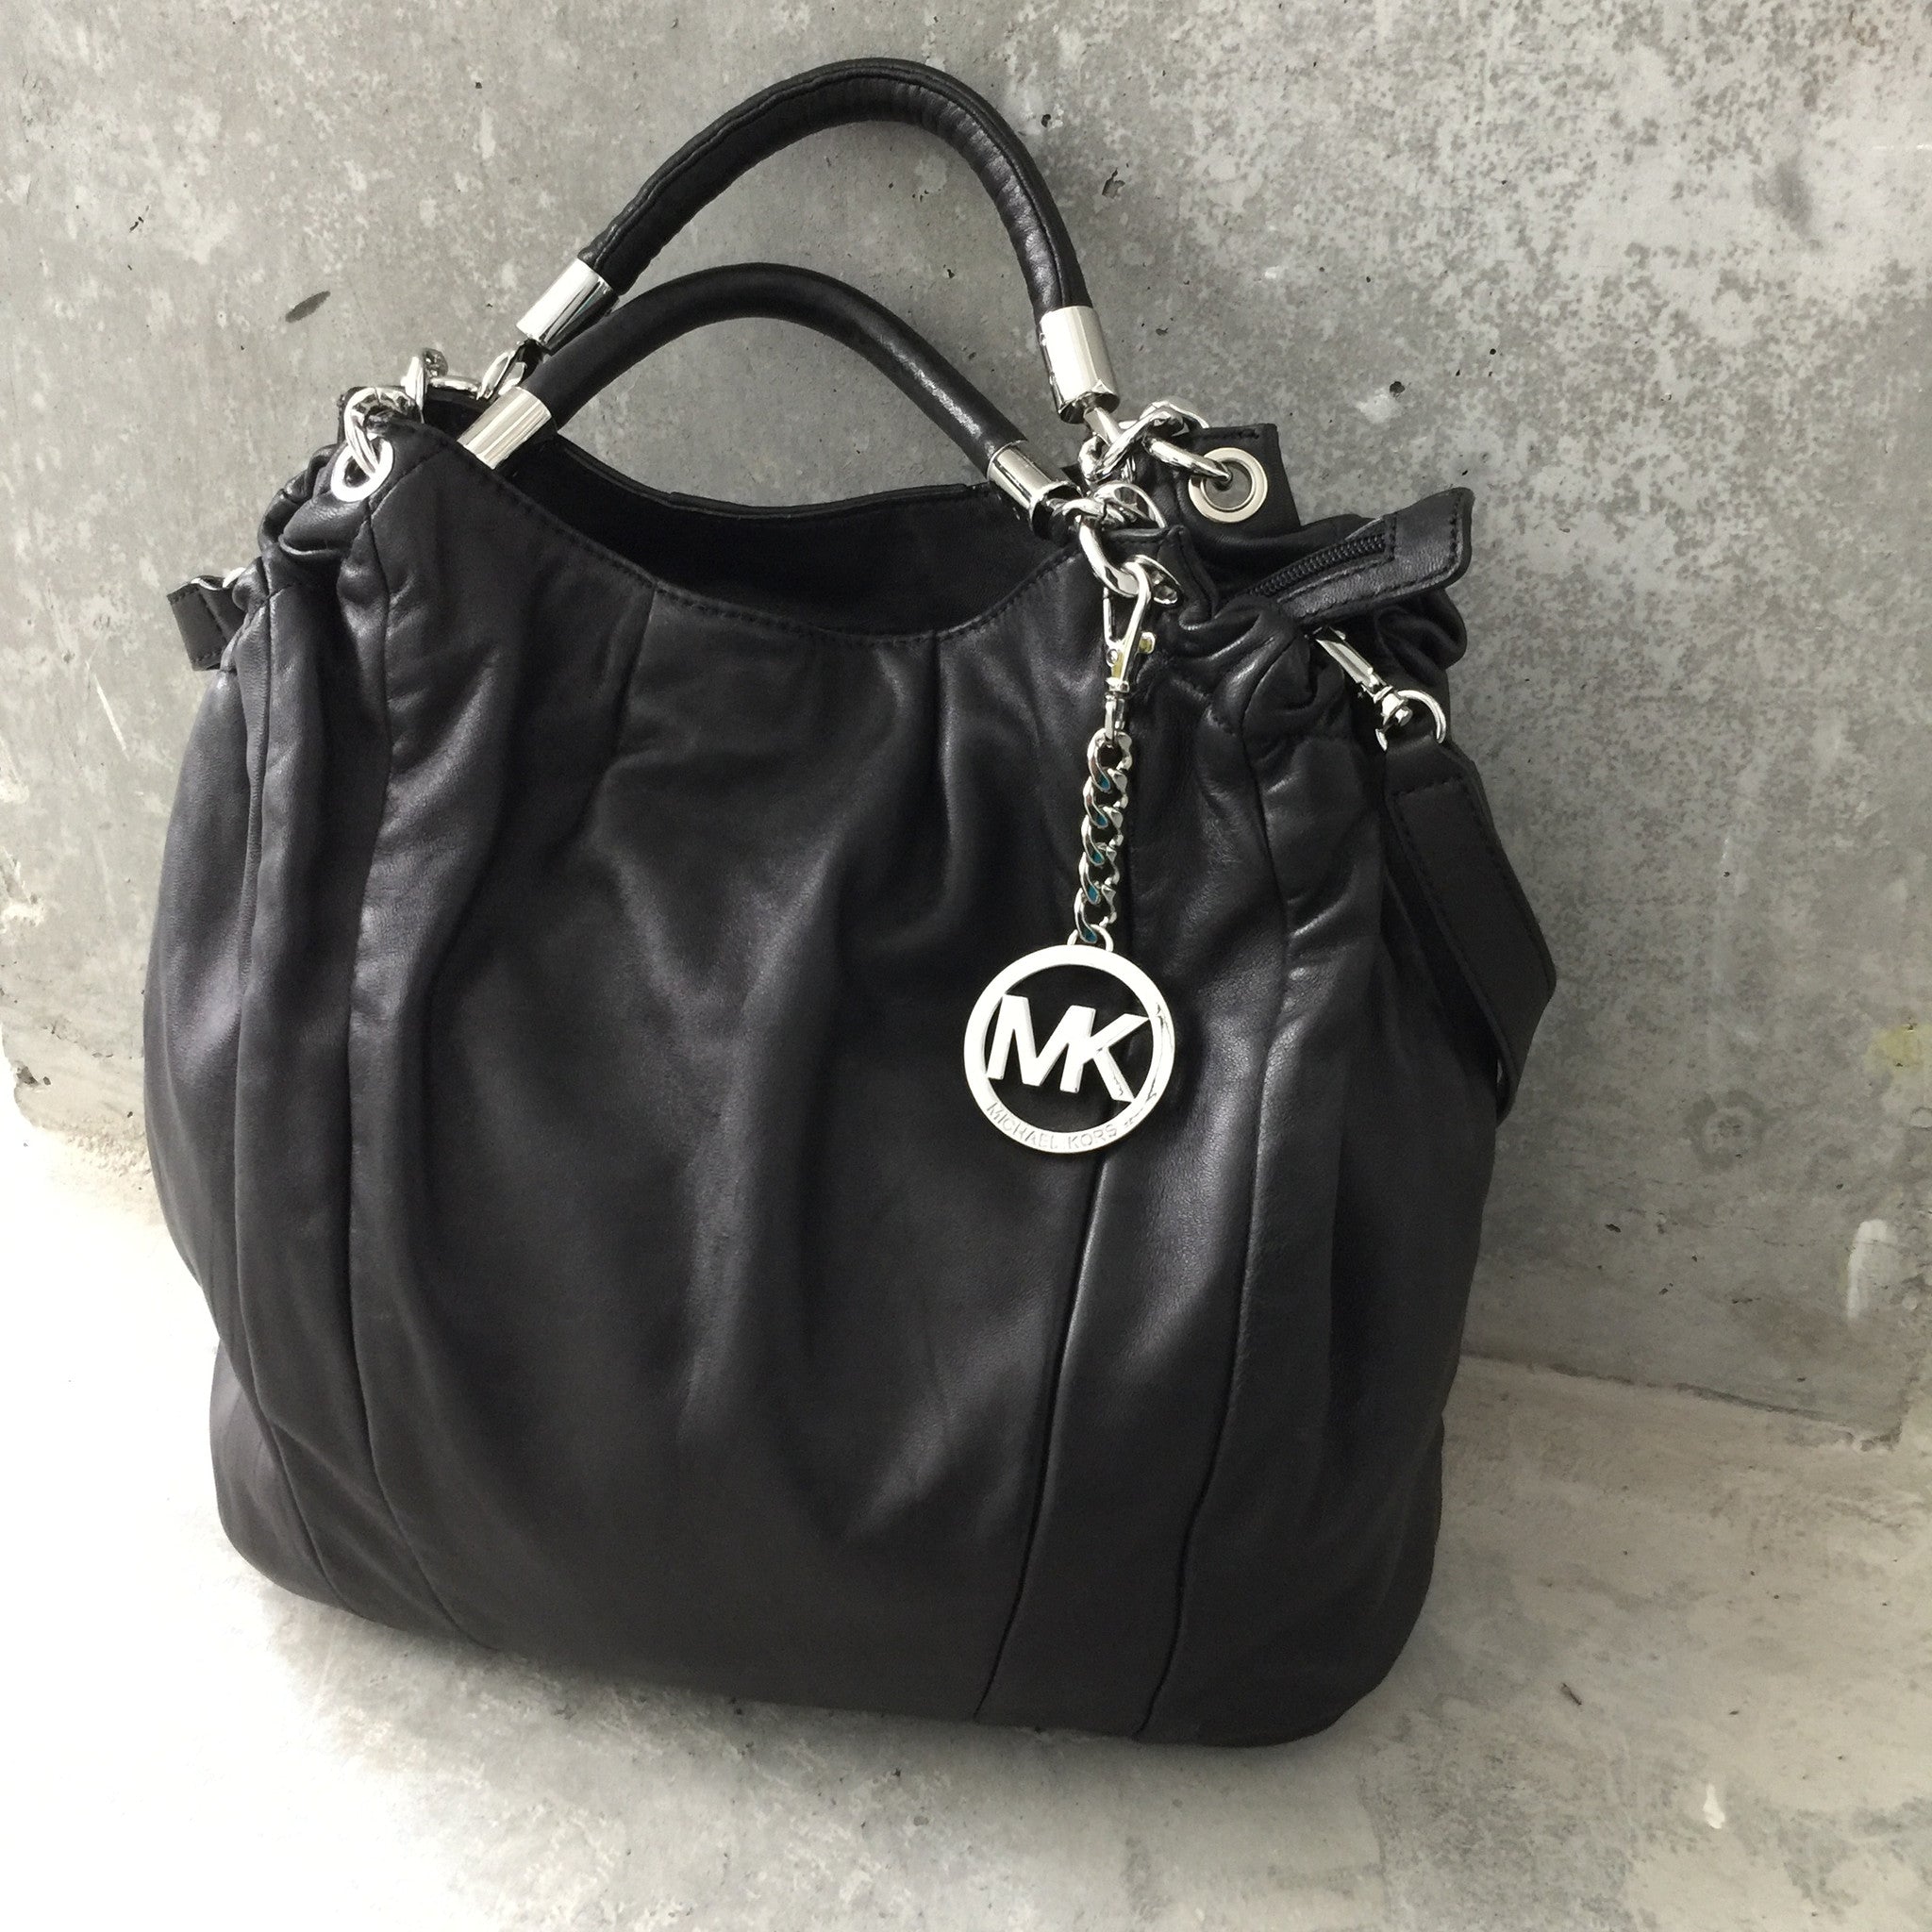 michael kors soft leather handbag